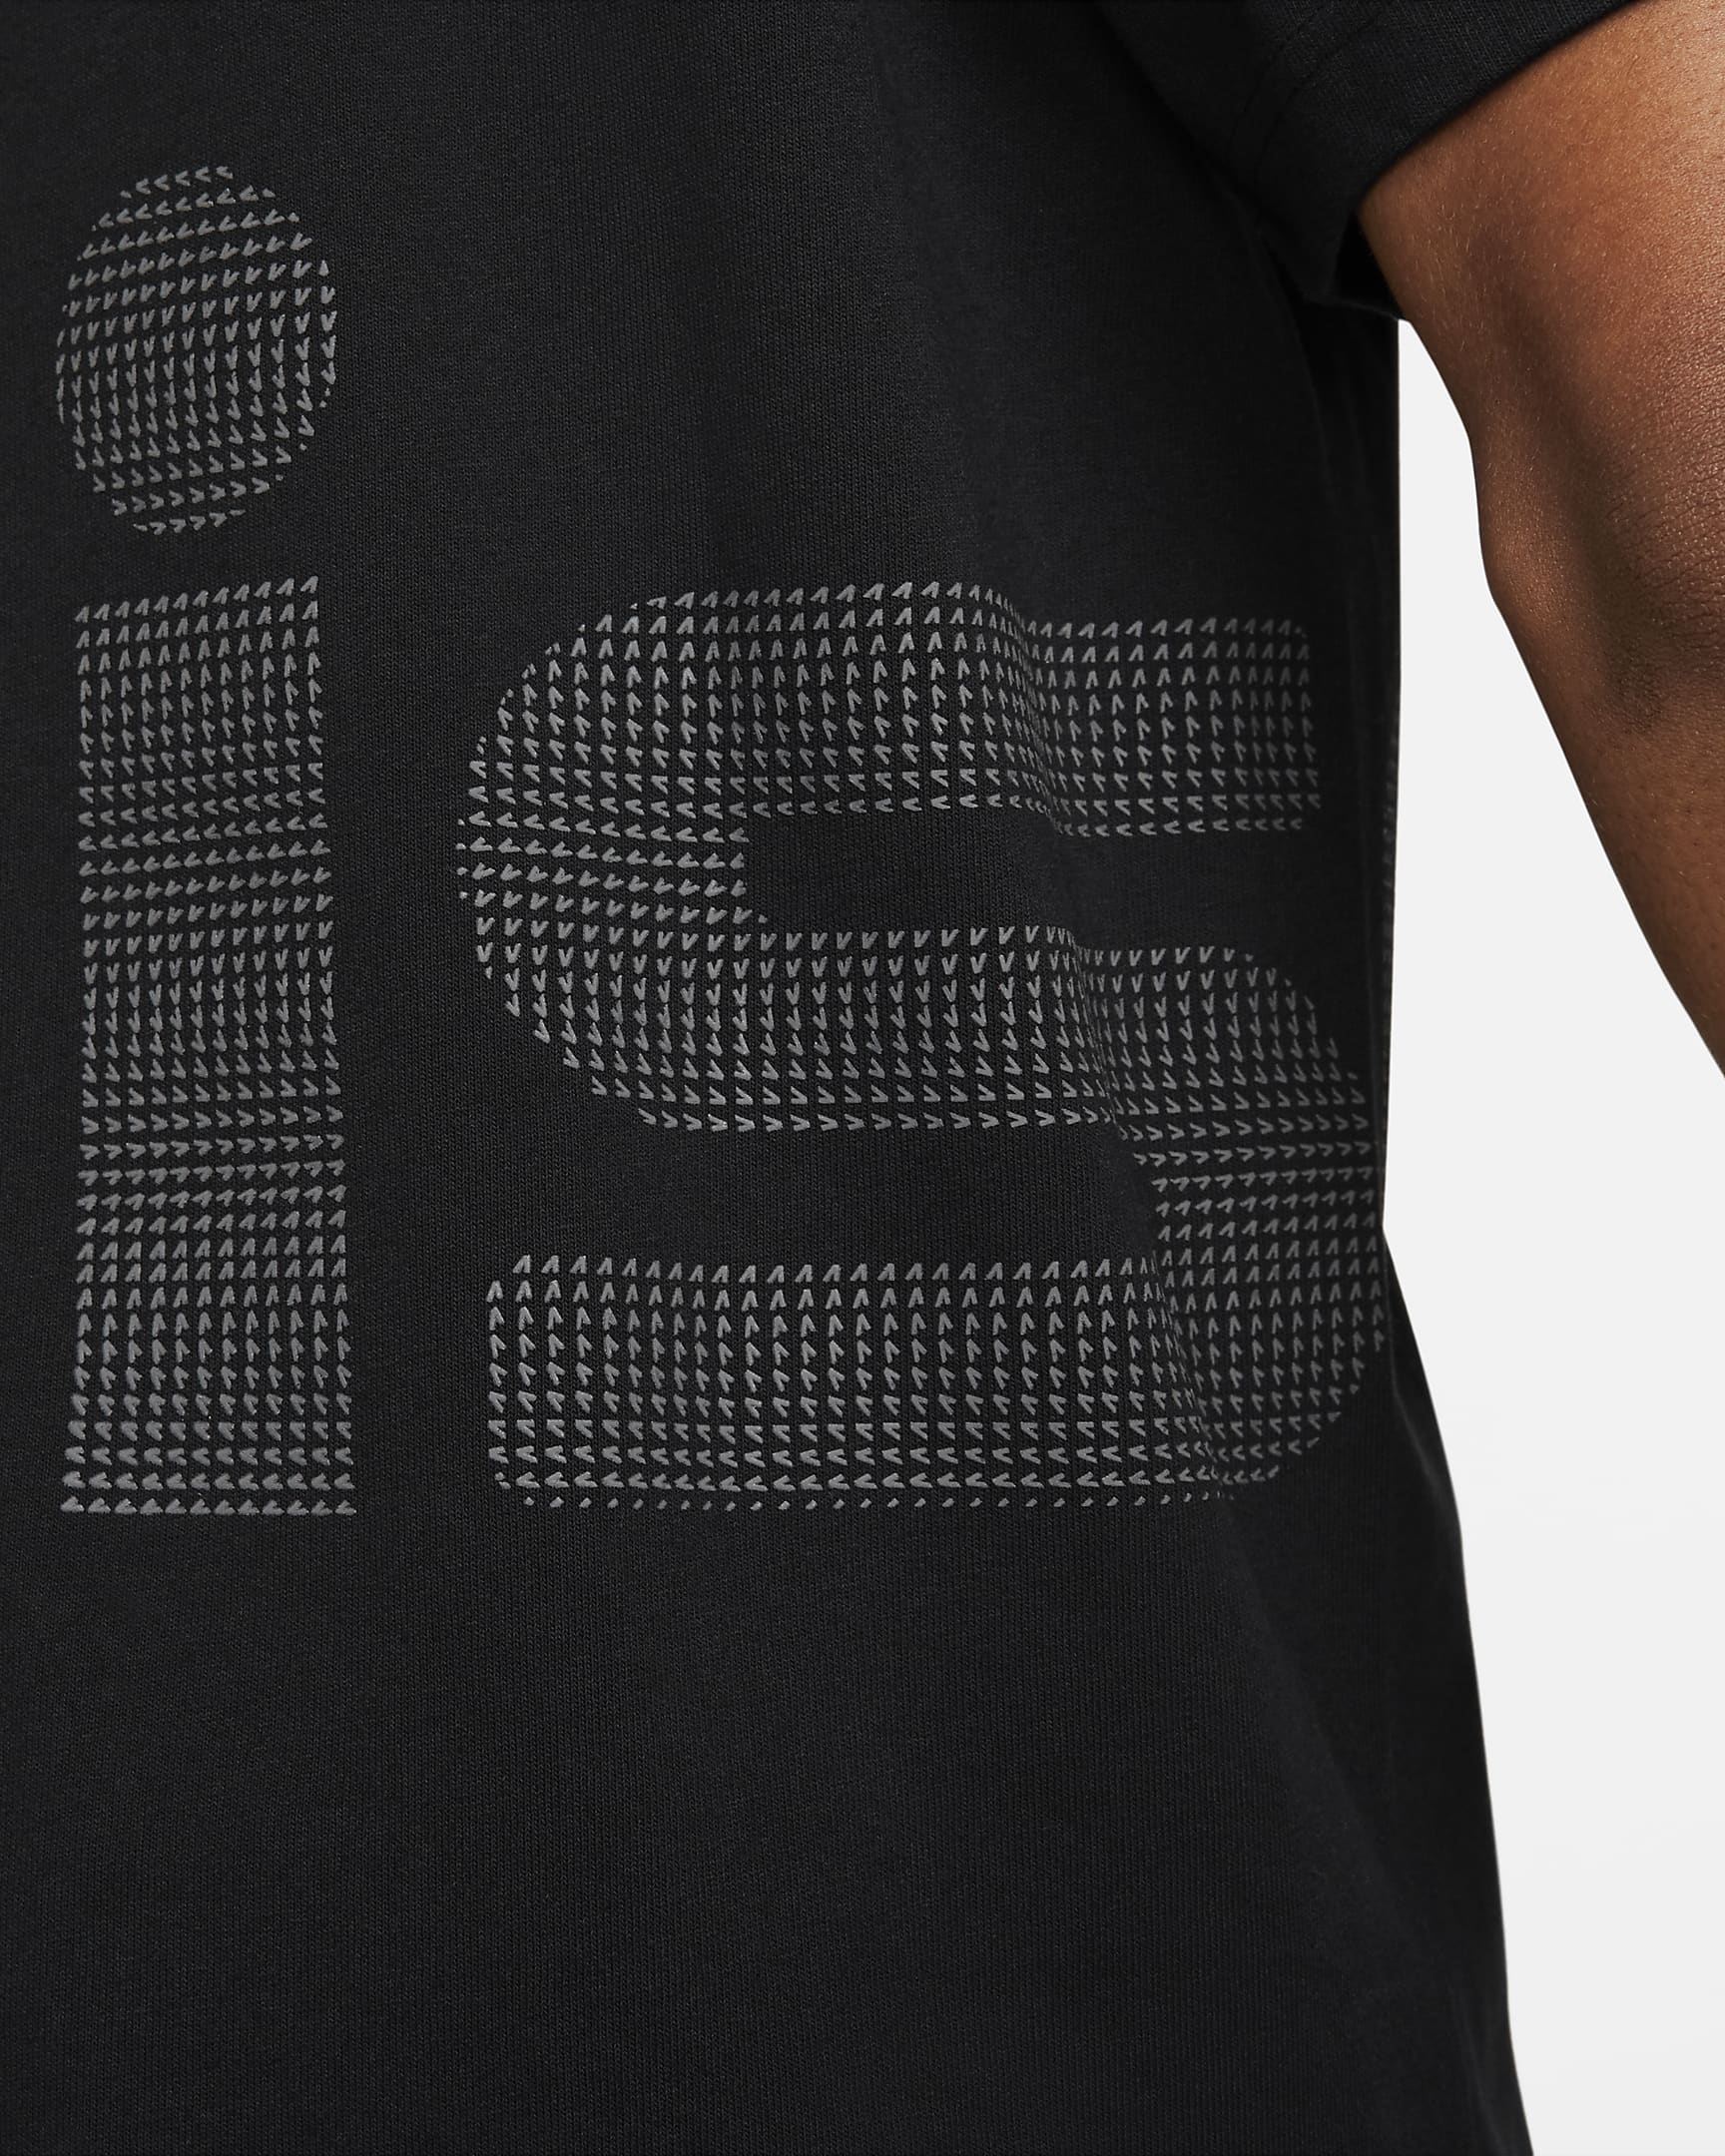 Nike ISPA Short-Sleeve T-Shirt. Nike HU